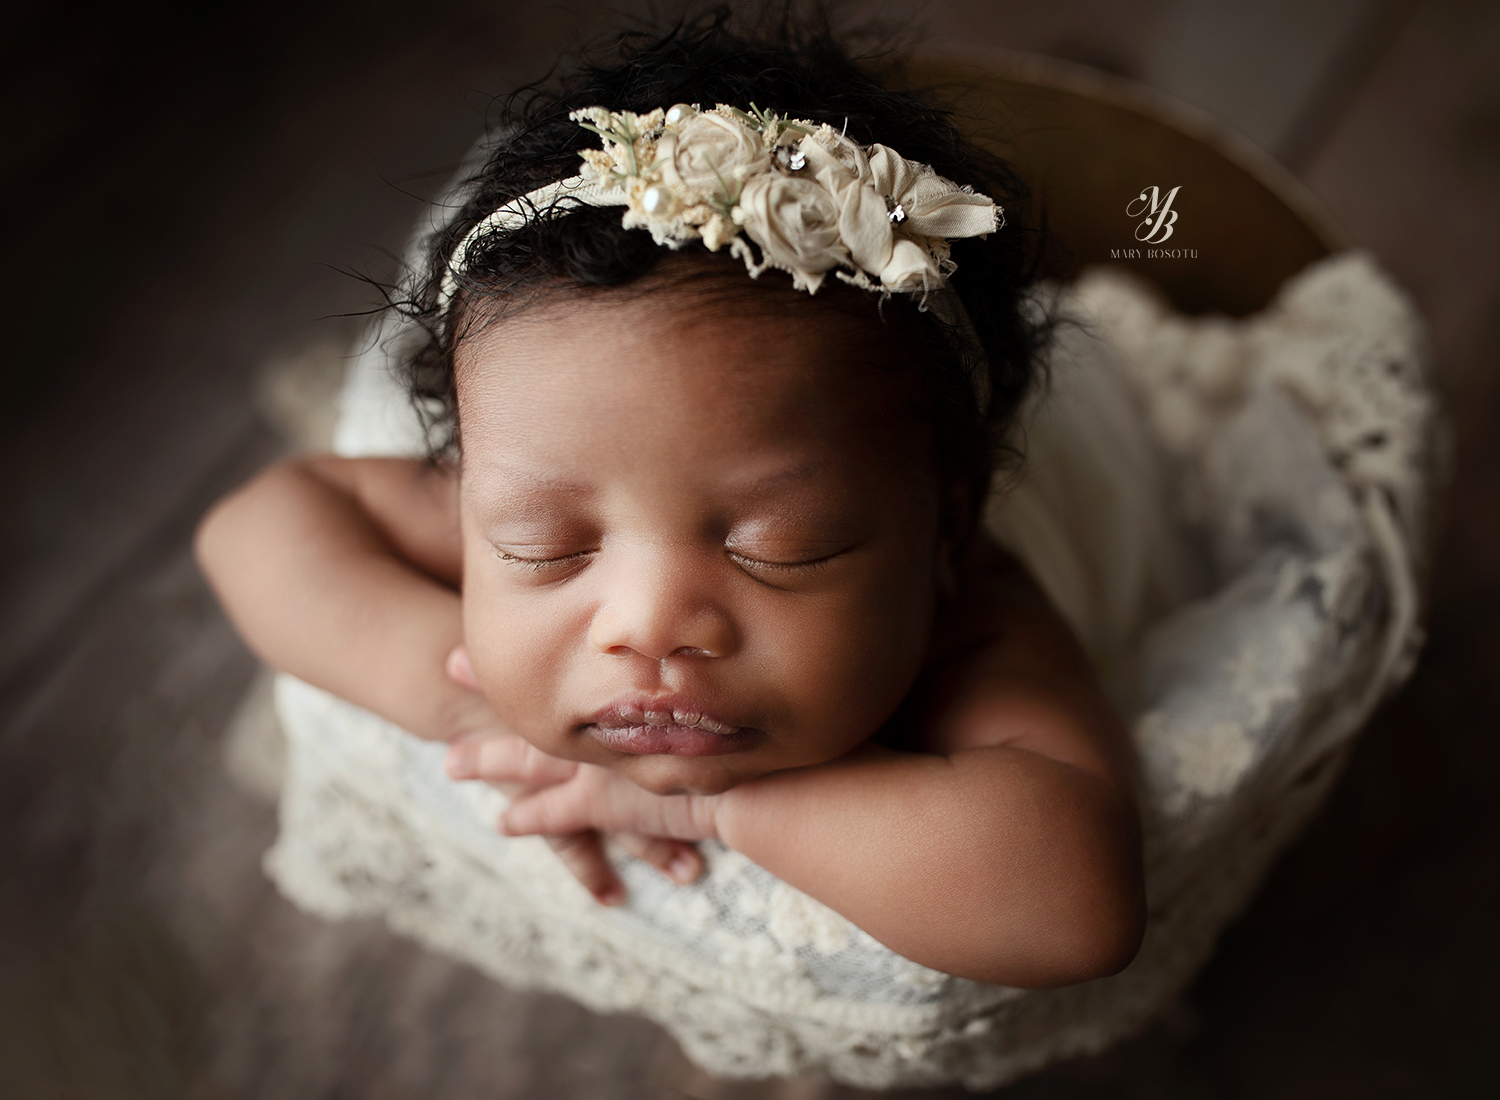 newborn-photography-baltimore-maryland-mary-bosotu